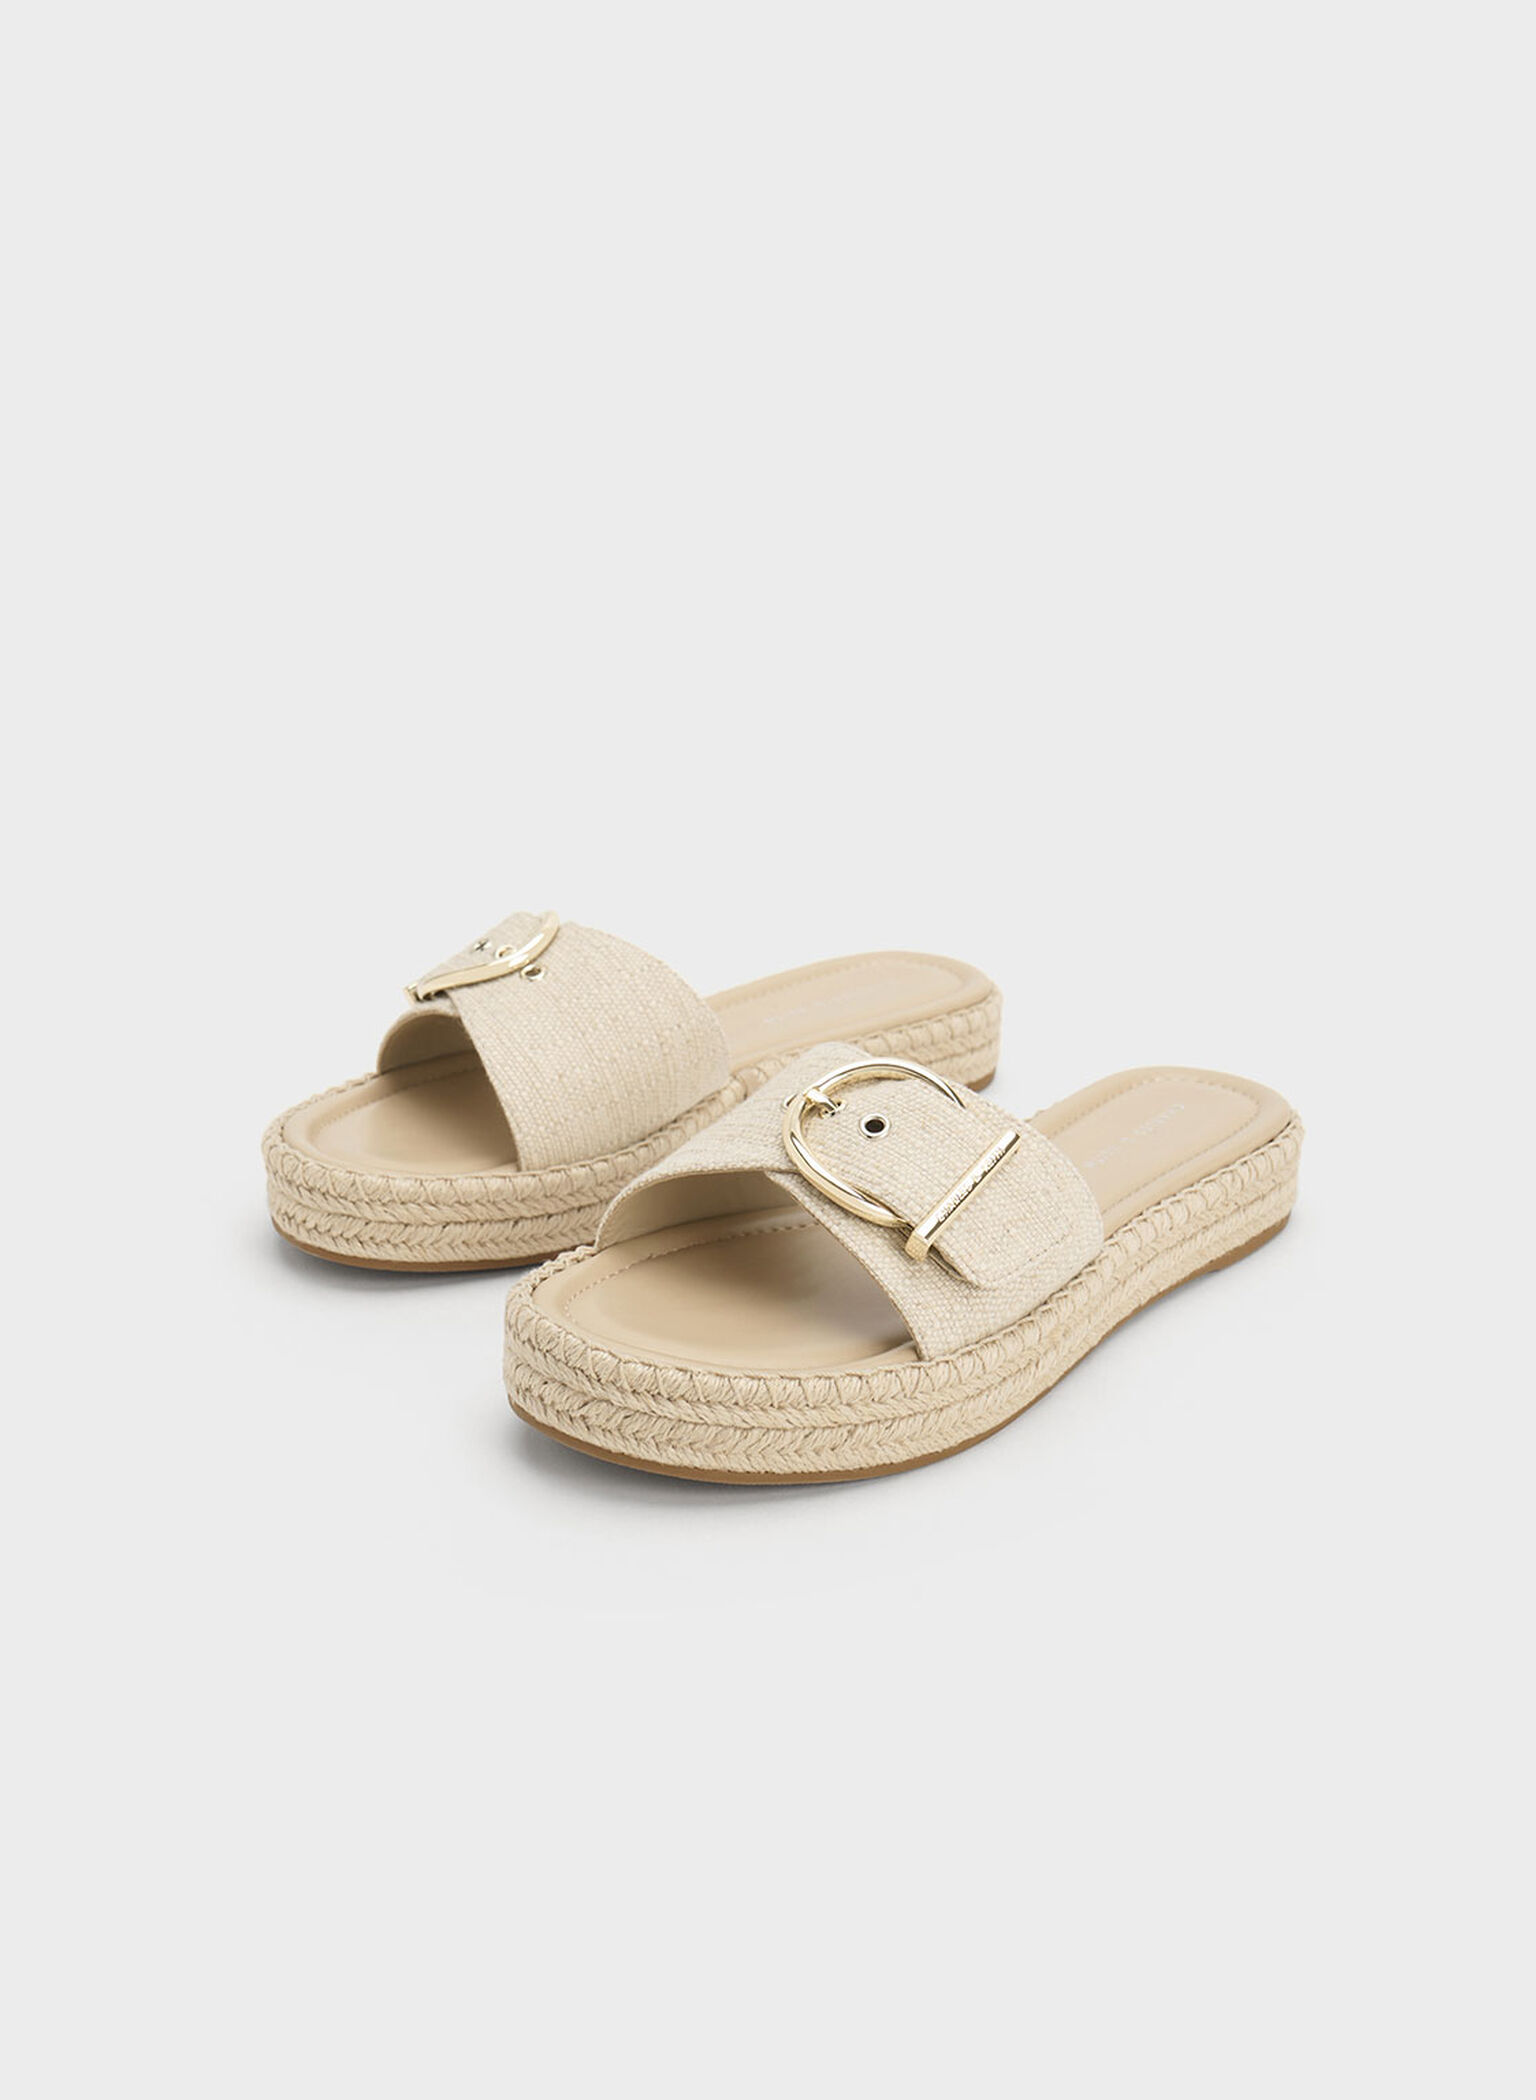 Beige Linen Buckled Espadrille Flat Sandals - CHARLES & KEITH US